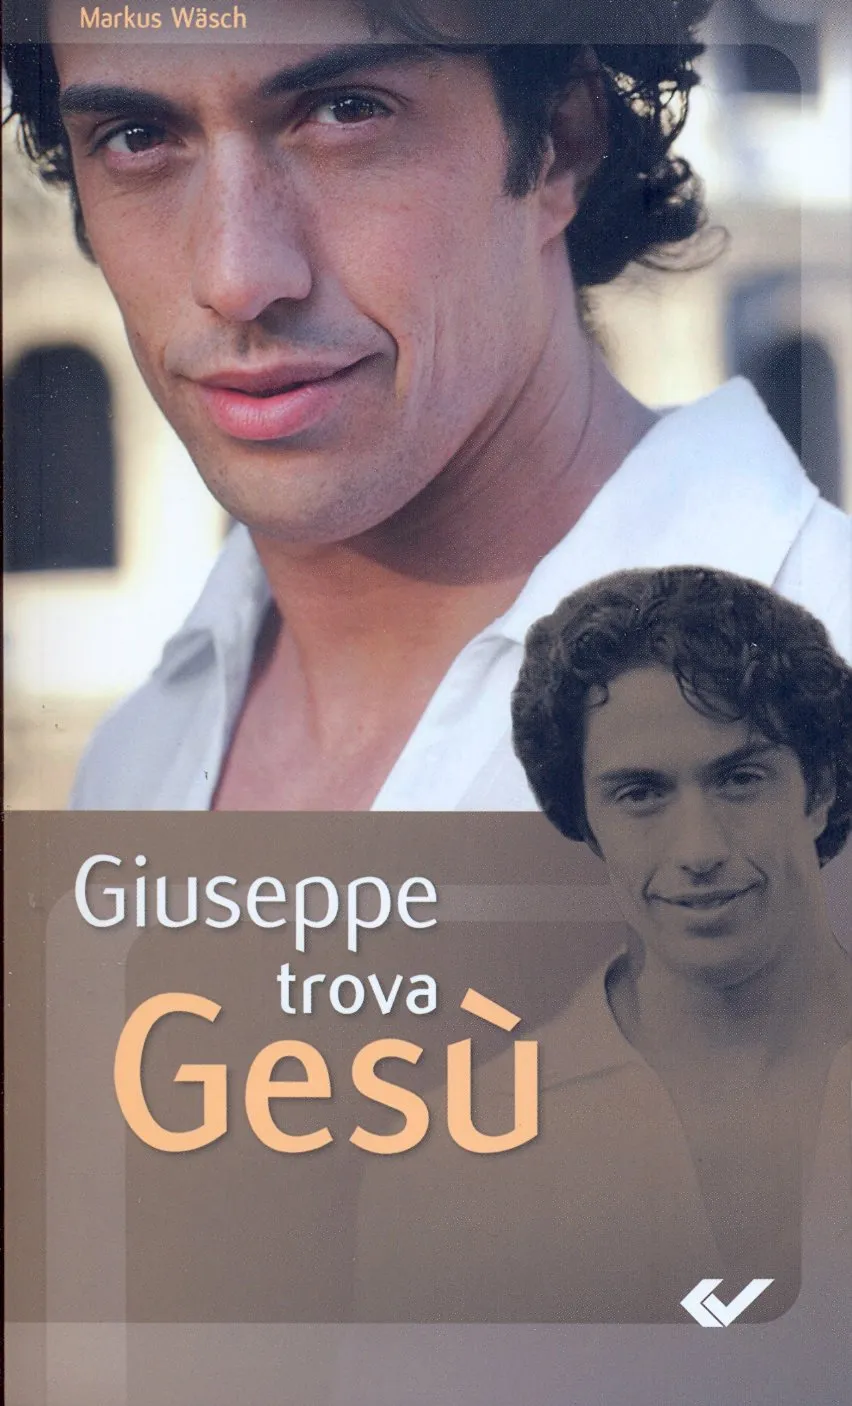 Giuseppe trova Gesù (italienisch, Giuseppe findet Jesus)